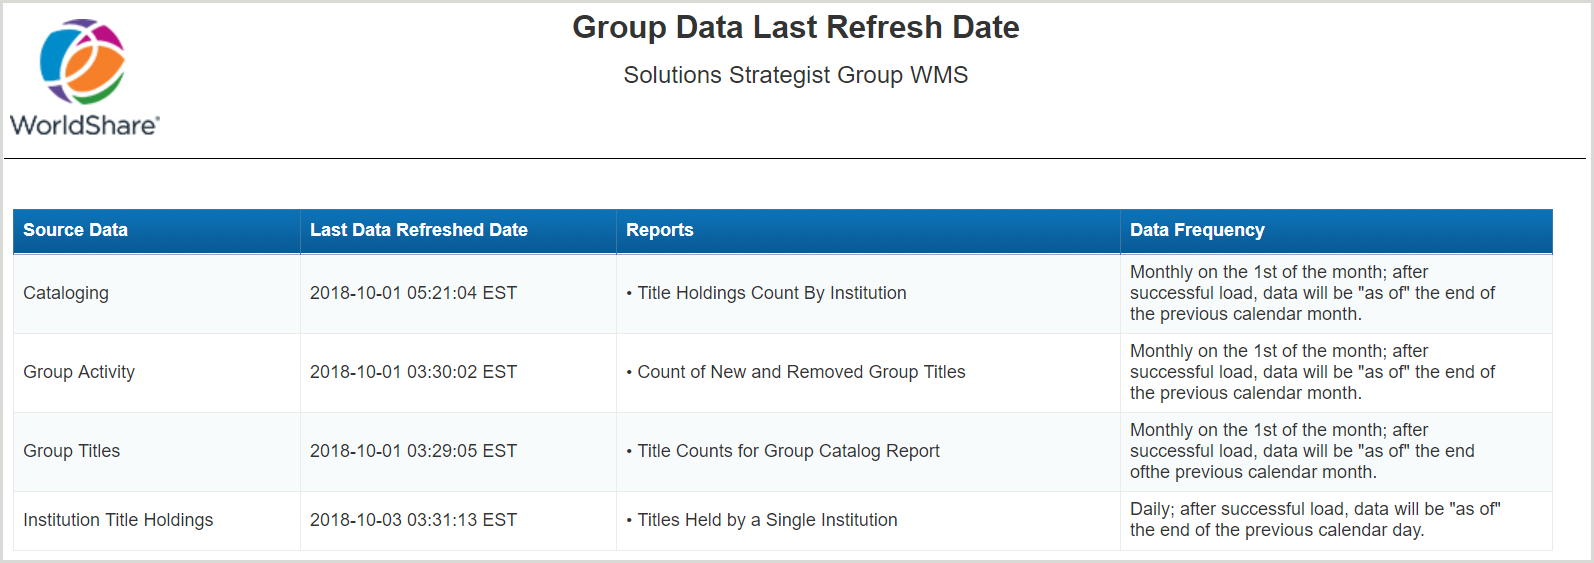 Group Data Last Refresh Date